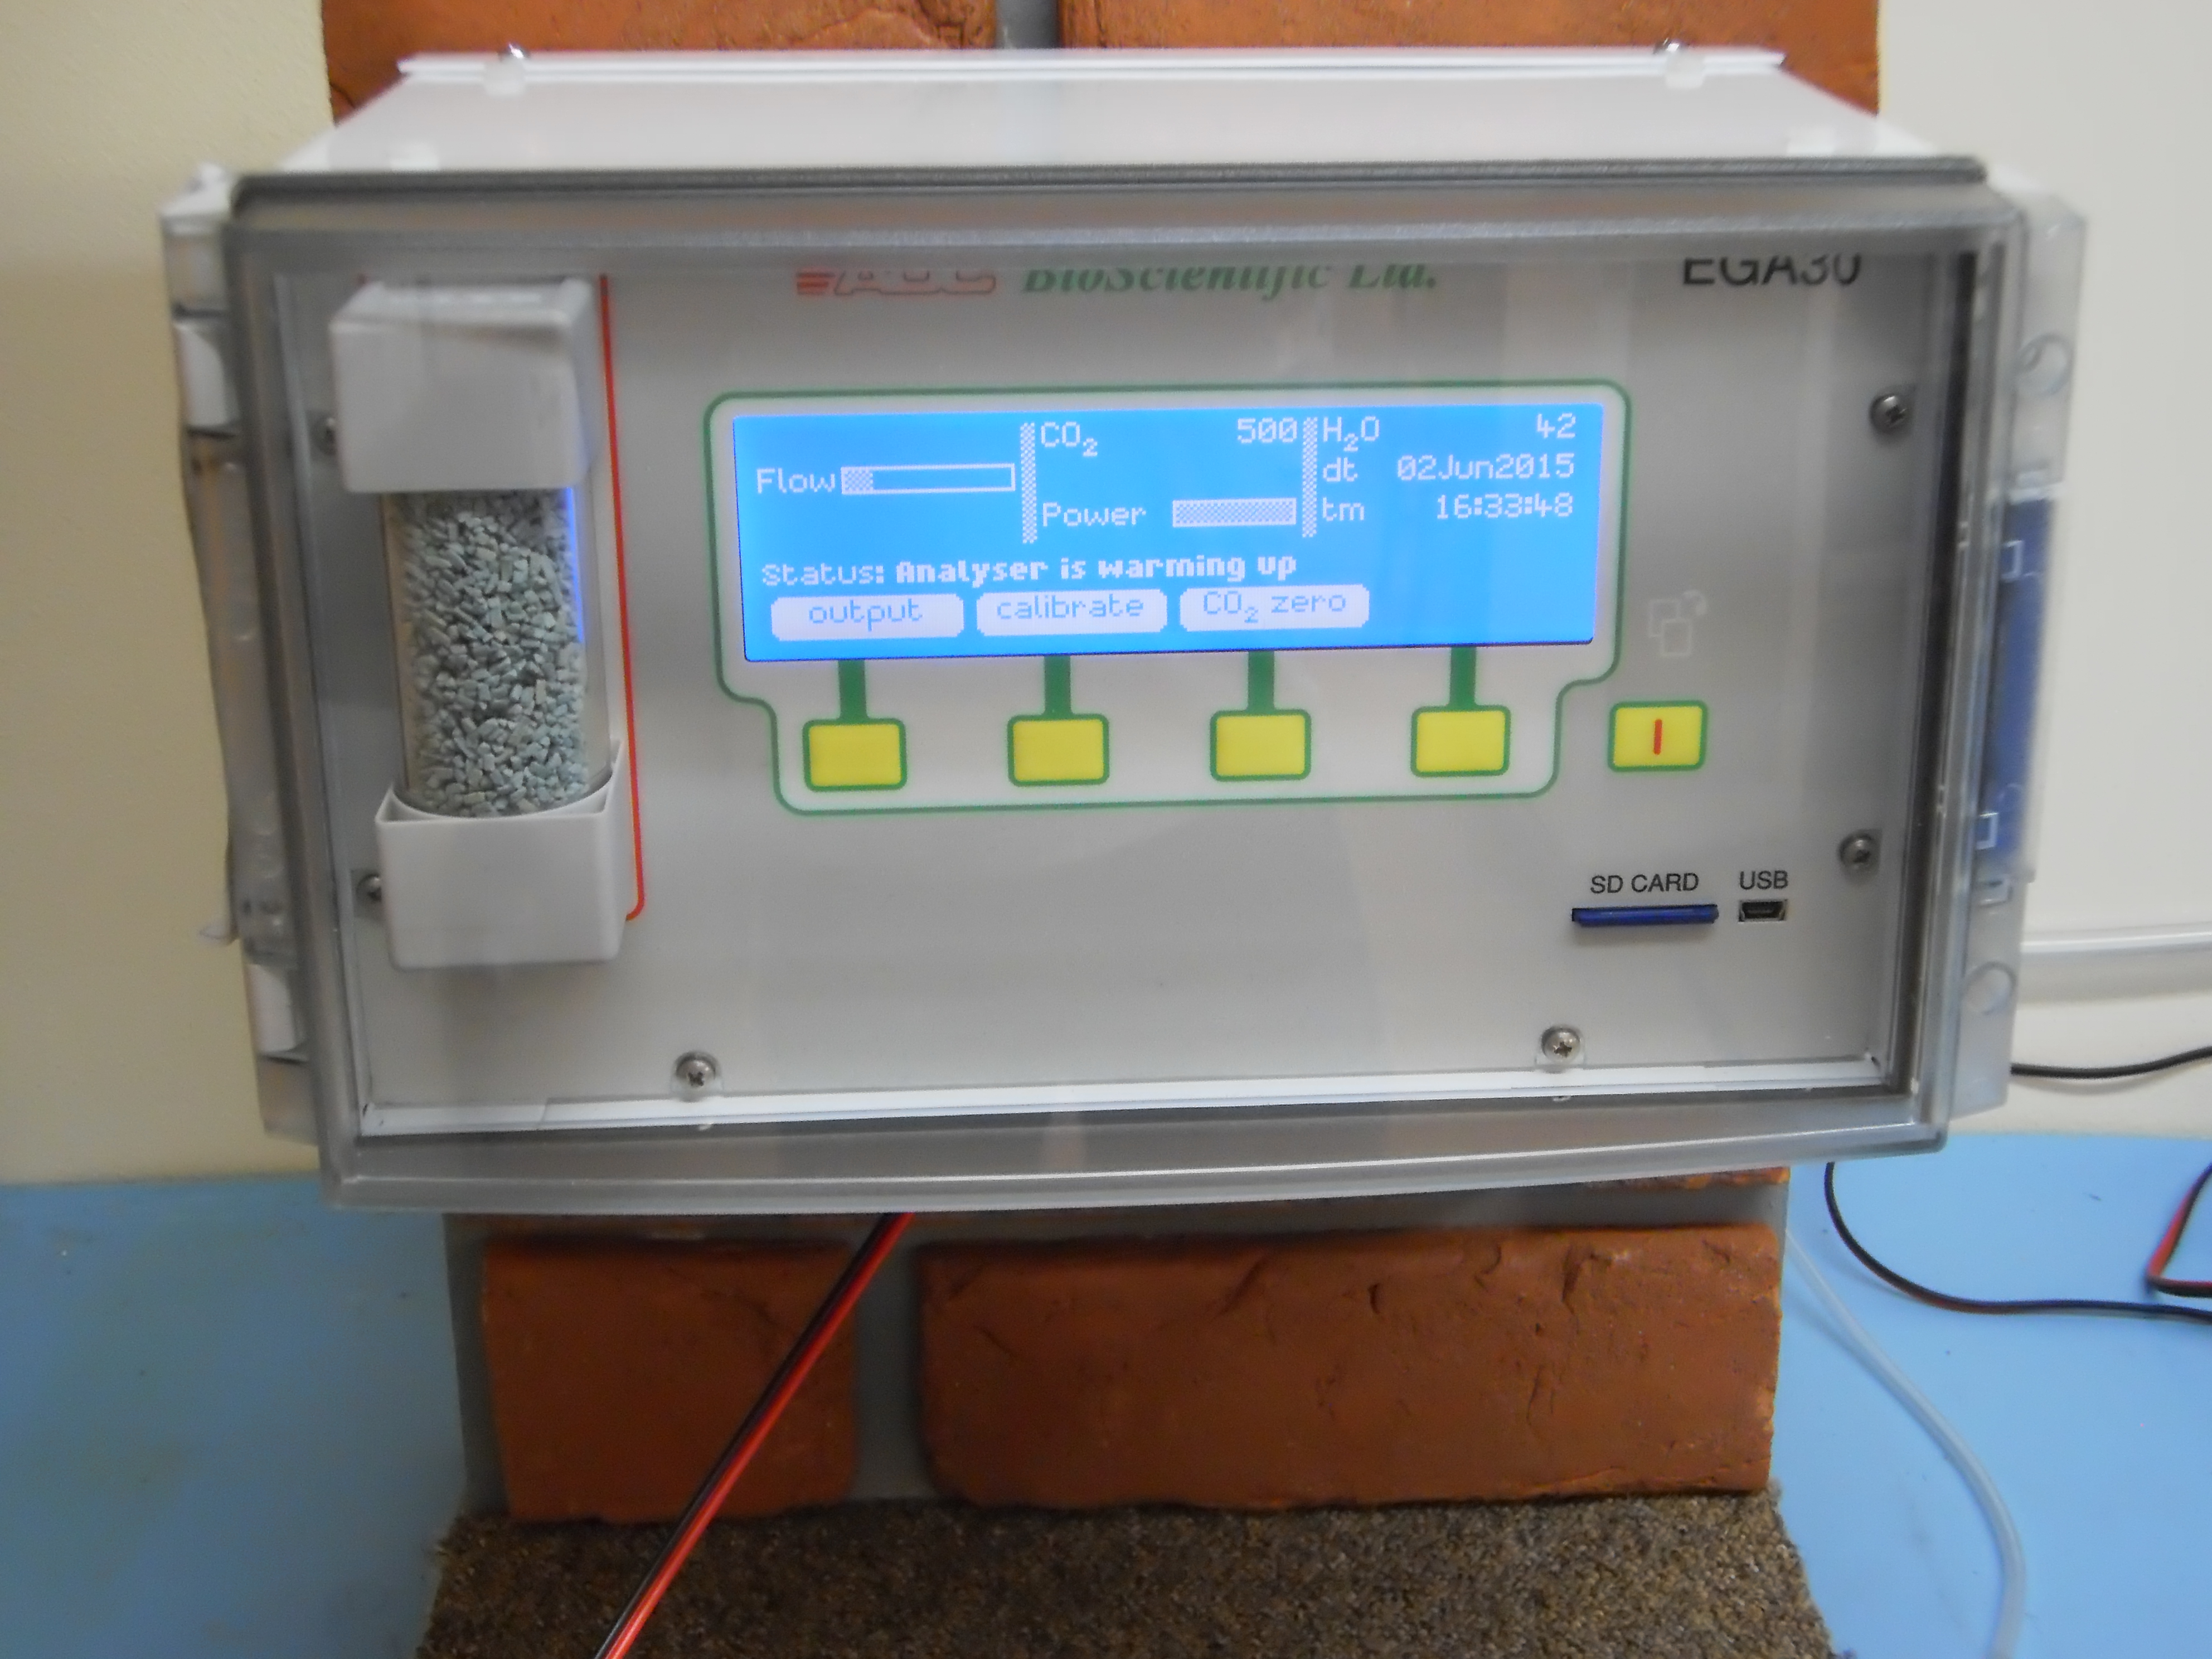 EGA30 wall mounted gas analyser